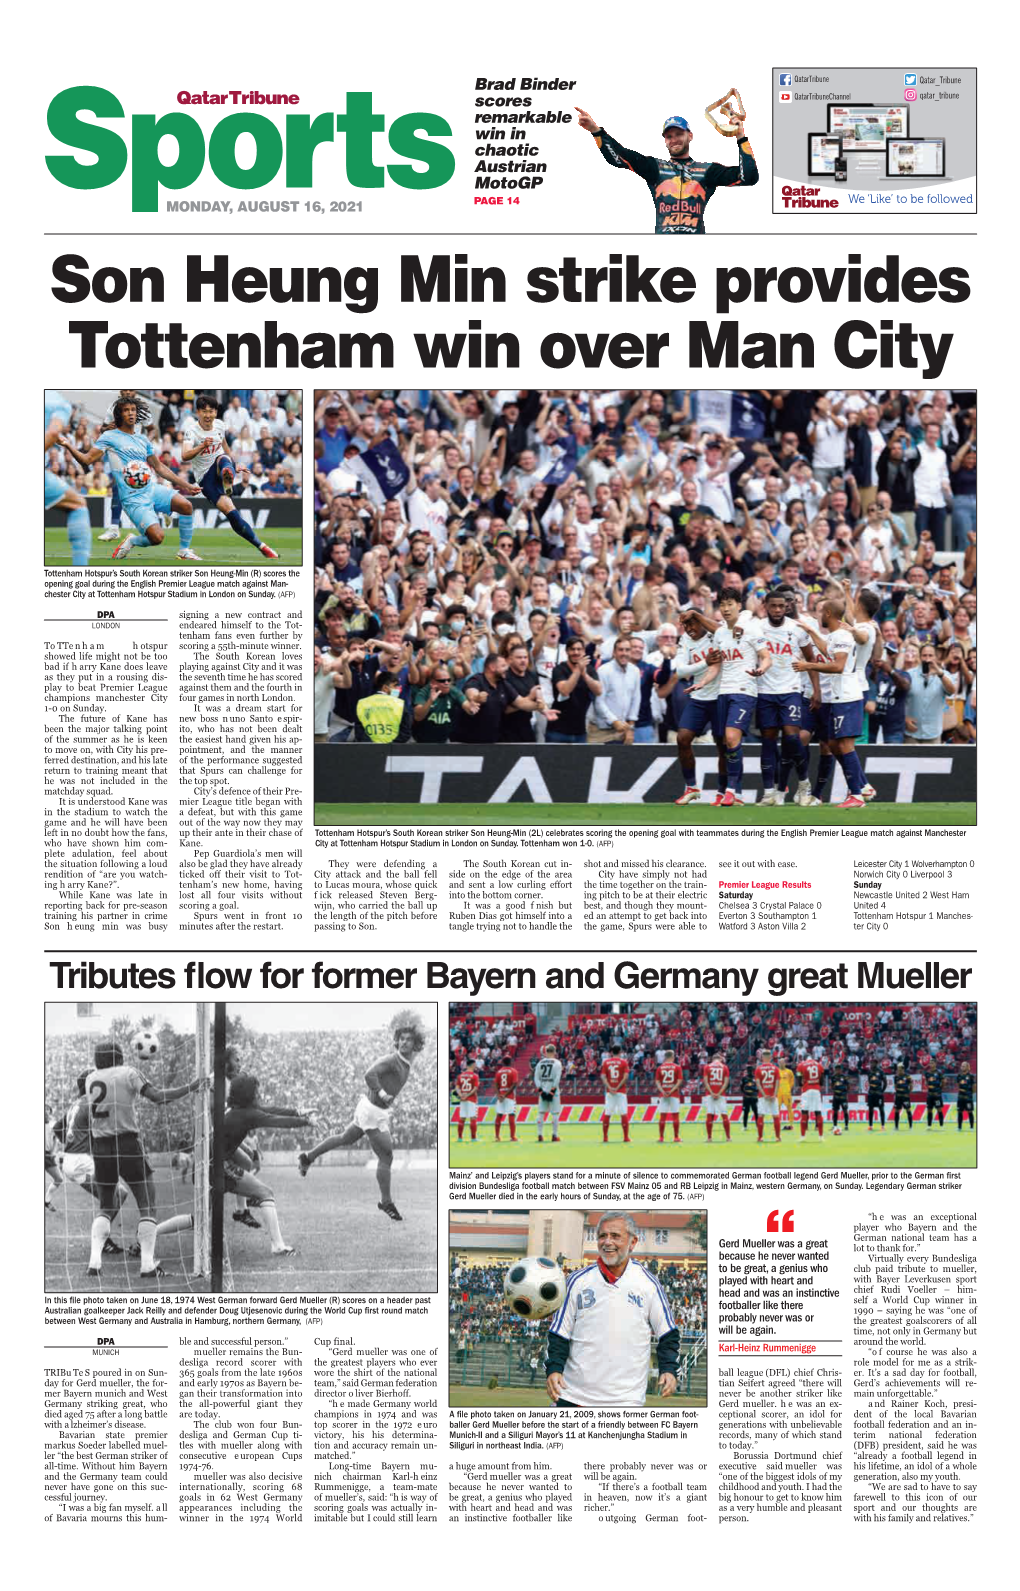 Son Heung Min Strike Provides Tottenham Win Over Man City